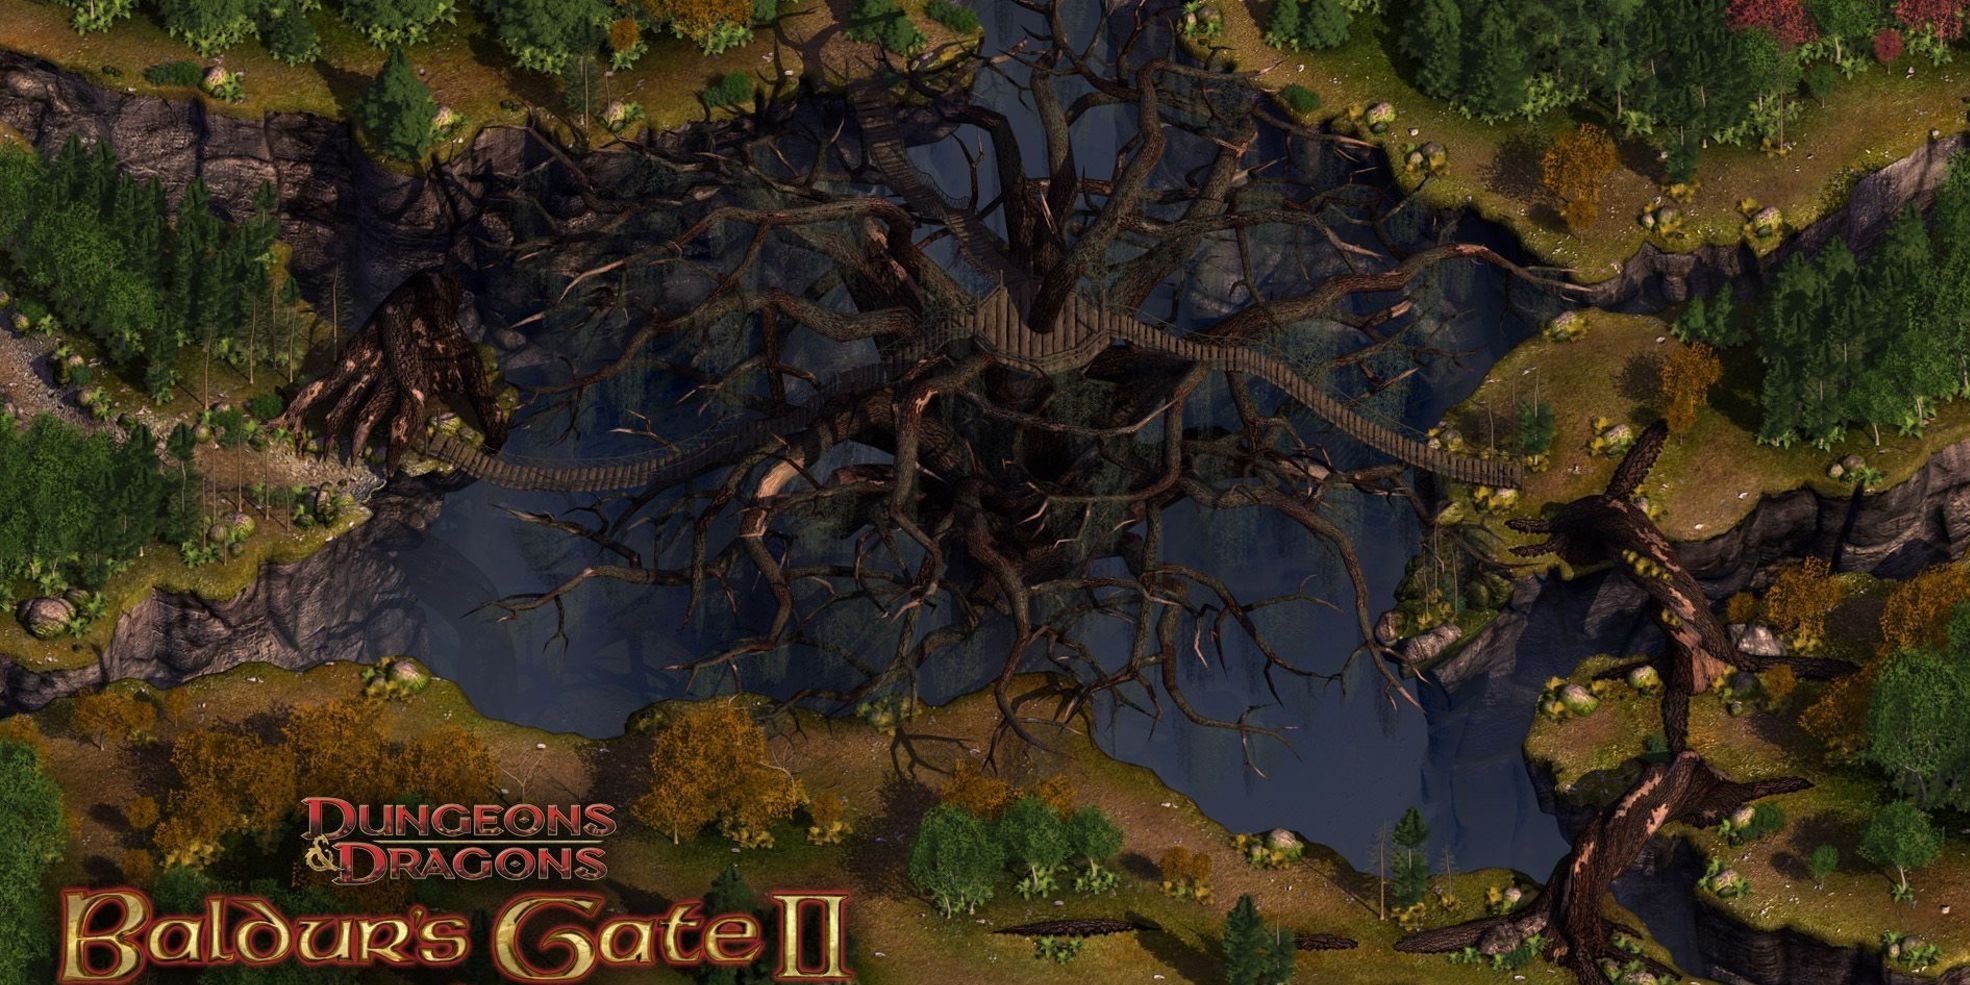 The overhead map from Baldur's Gate II